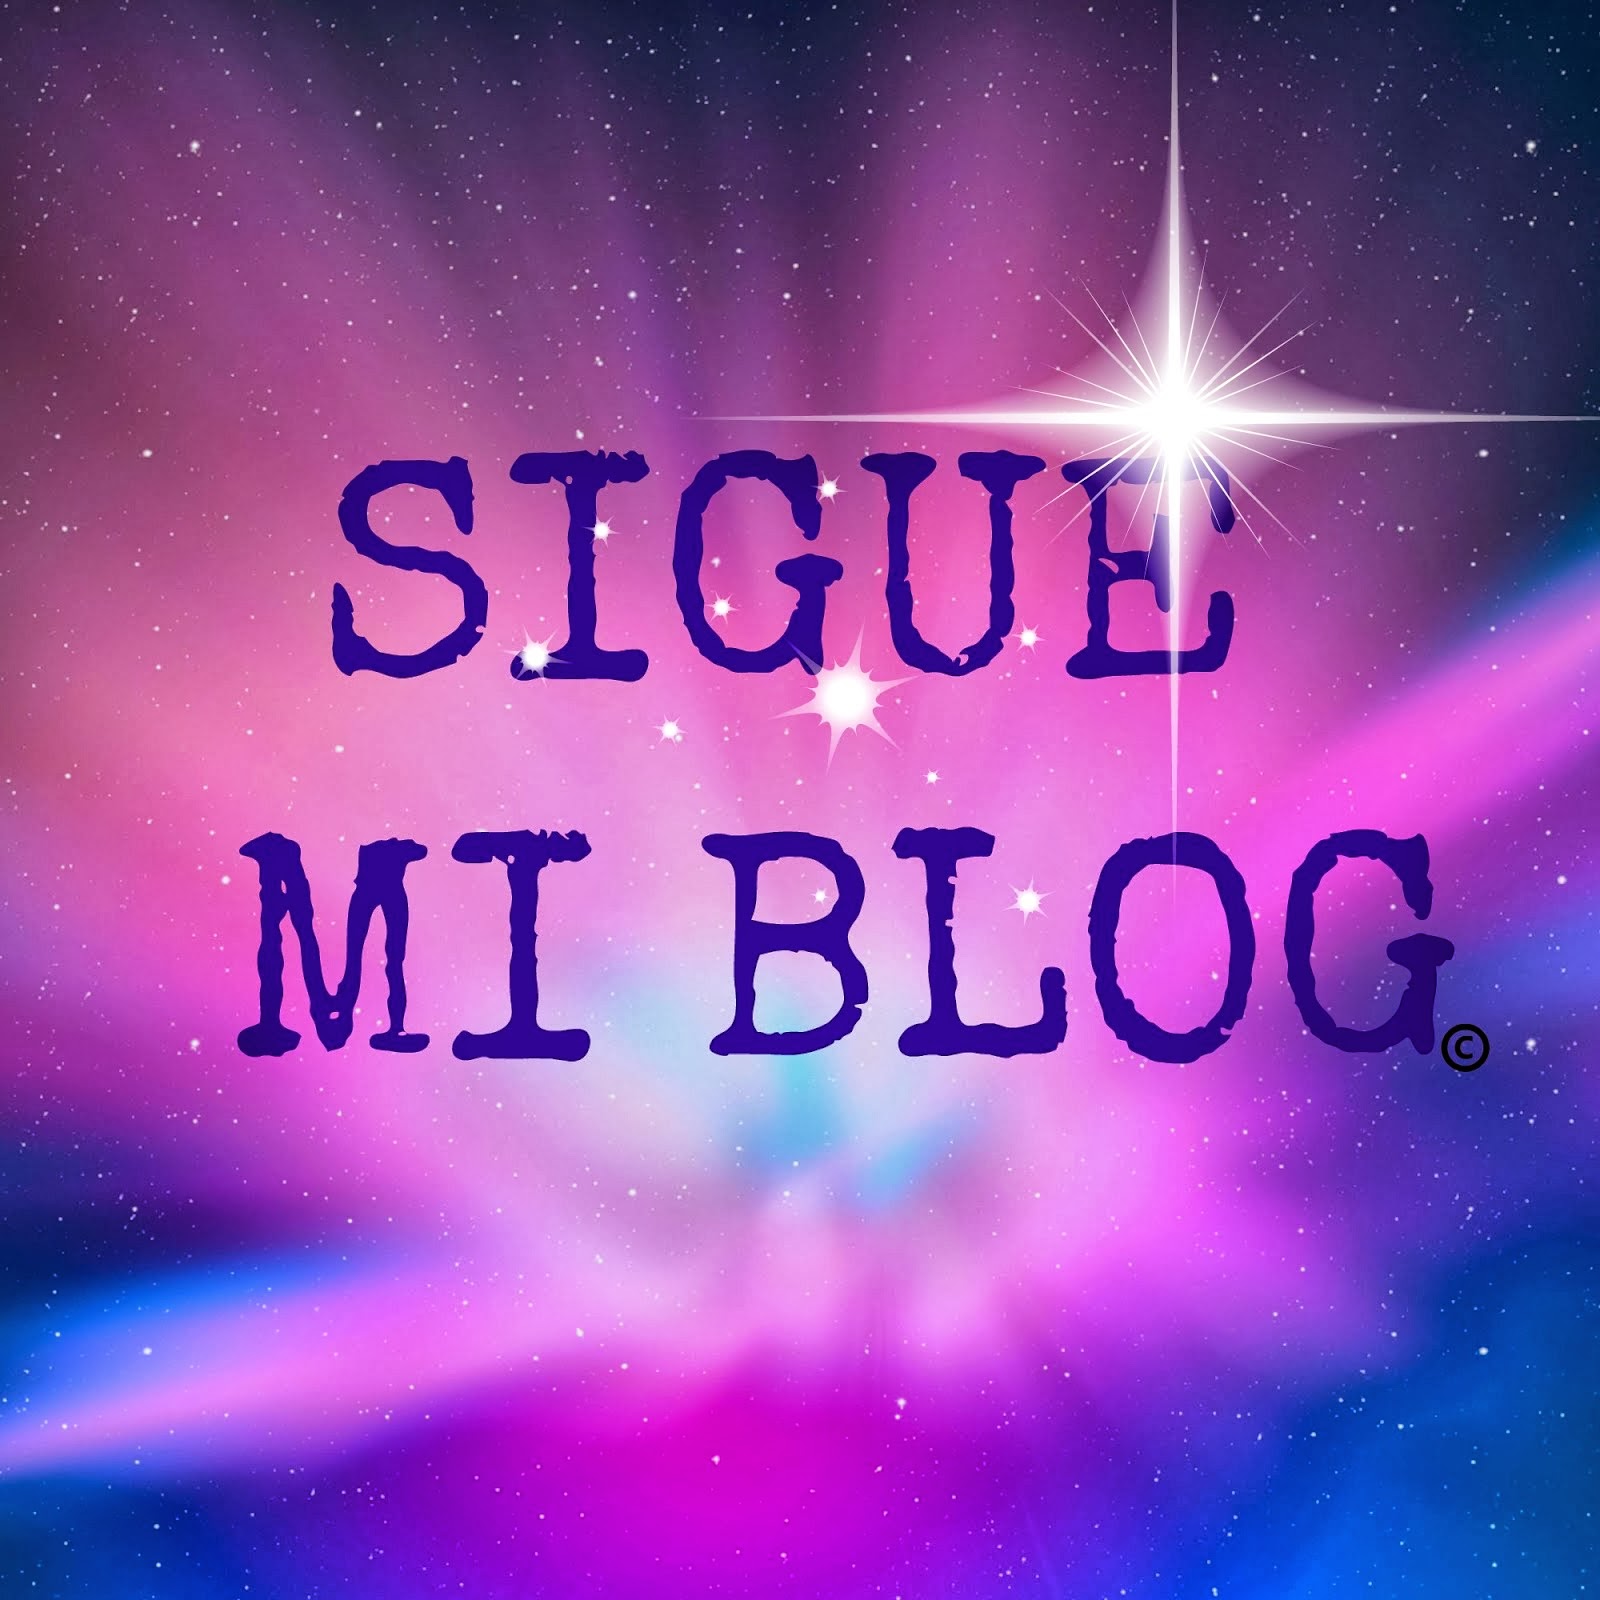 Follow my blog